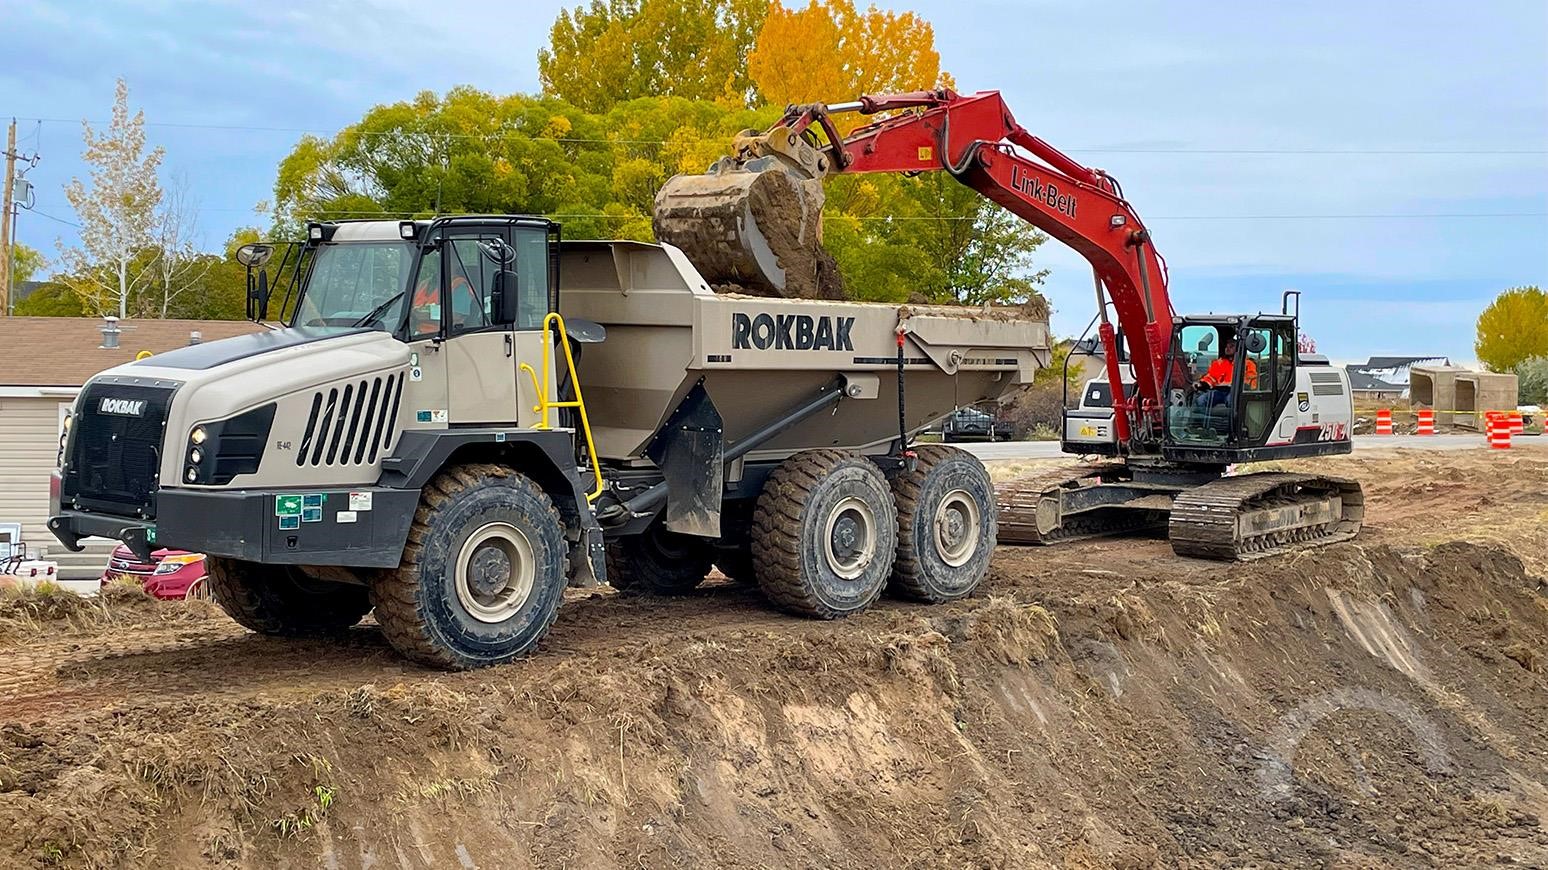 Rokbak Ra30 Articulated Dump Trucks Essential To Water Conservation